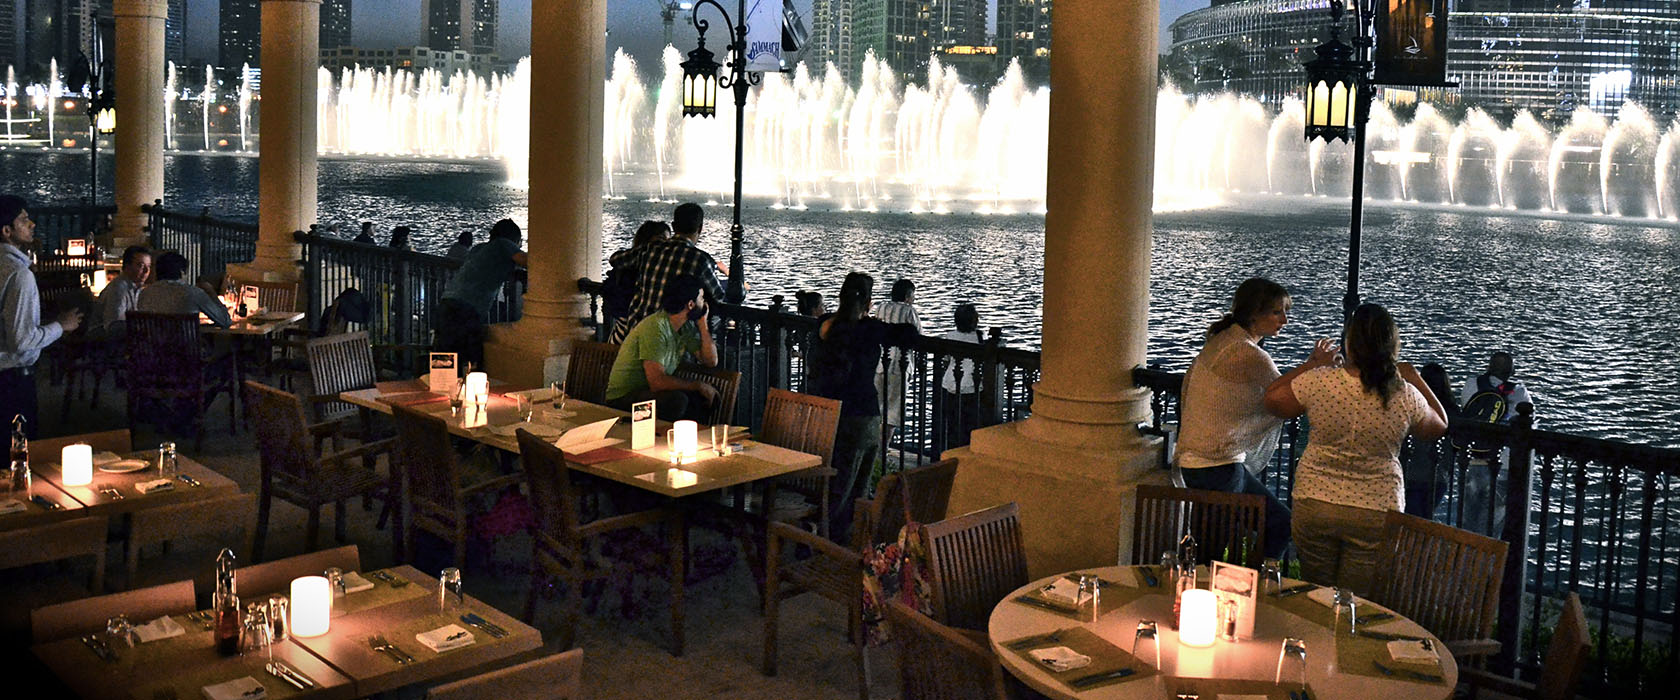 Dubai City Tour + Lunch at AbdelWahab Restaurant - Souk Al Bahar - From Abu Dhabi 